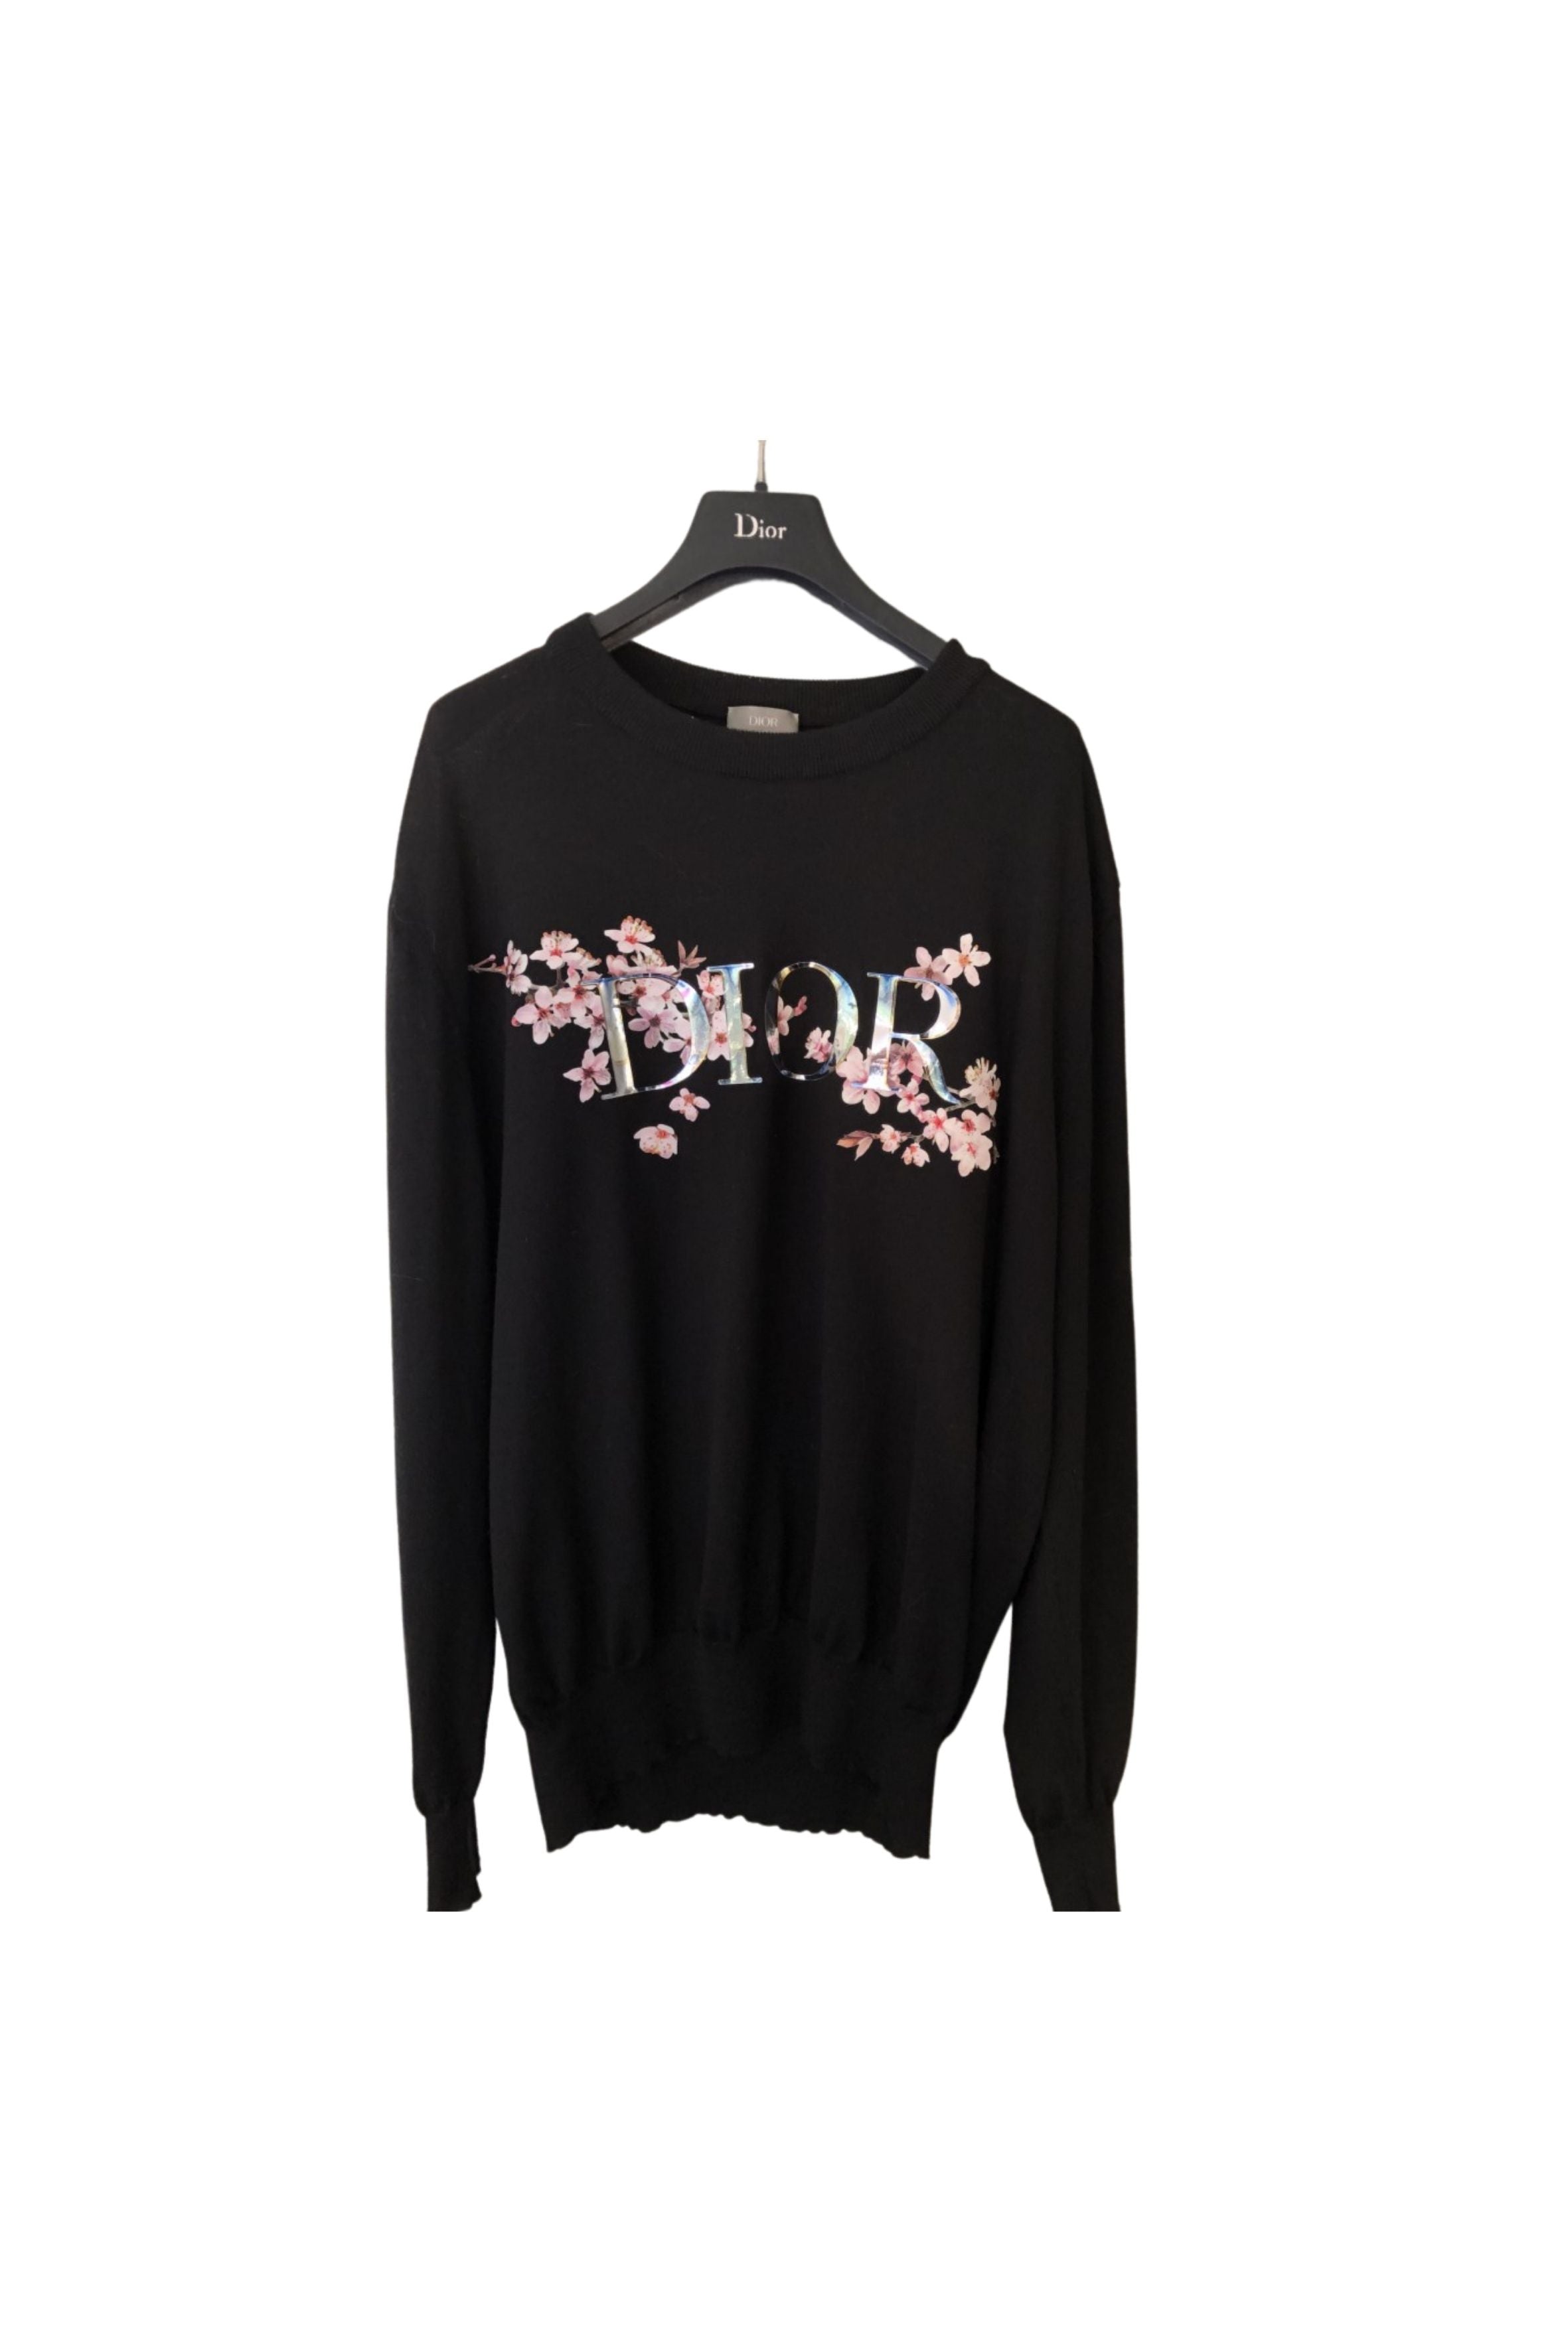 Dior x Sorayama Cherry Sweater